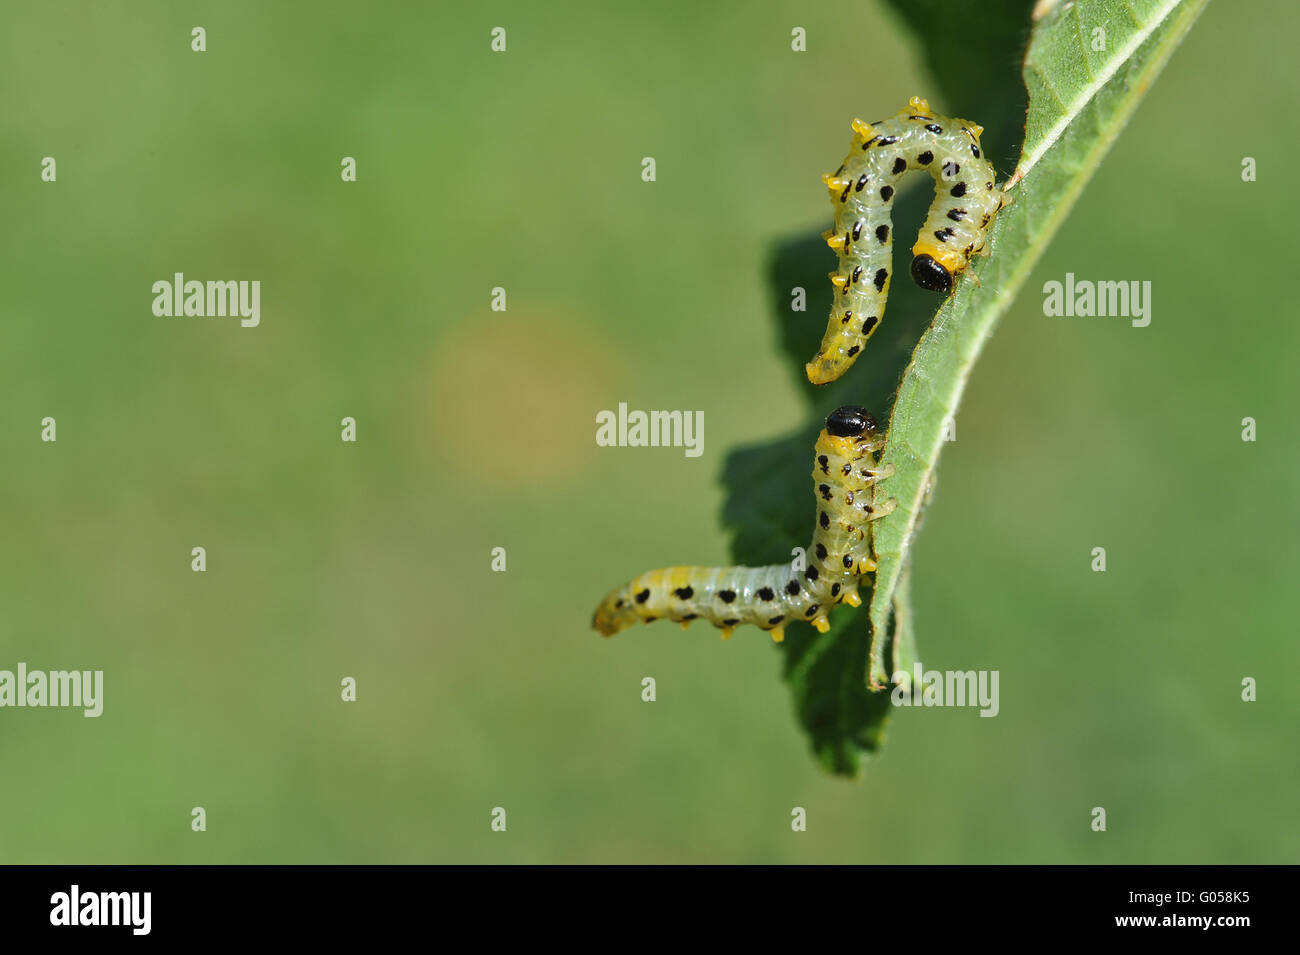 Caterpillars on leaf Stock Photo